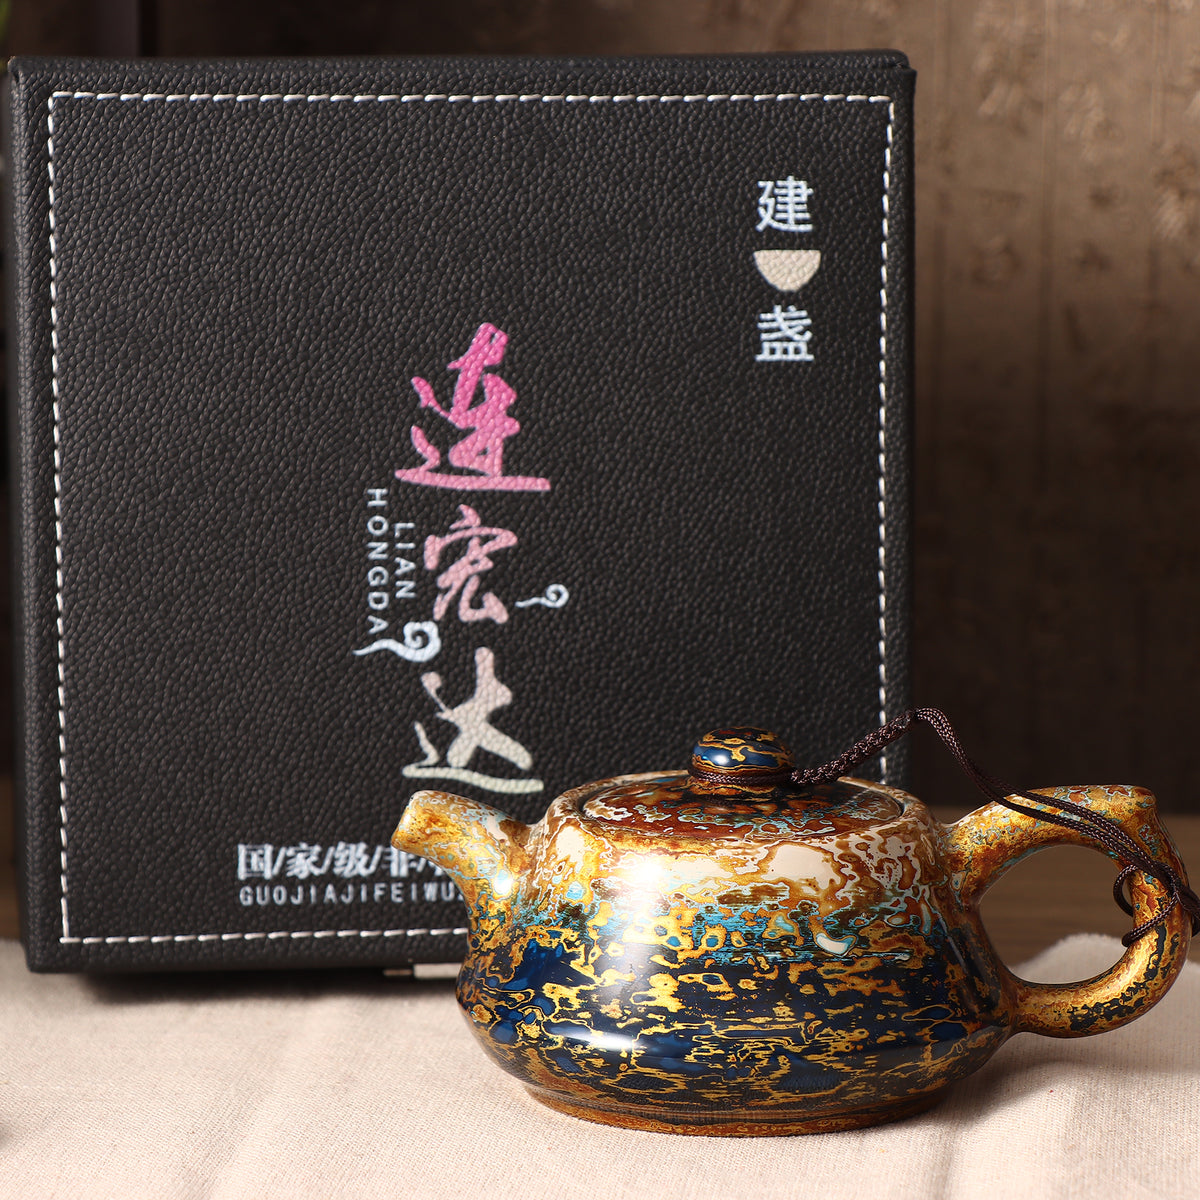 Hongda Lian's Daqi "Tibet" Teapot